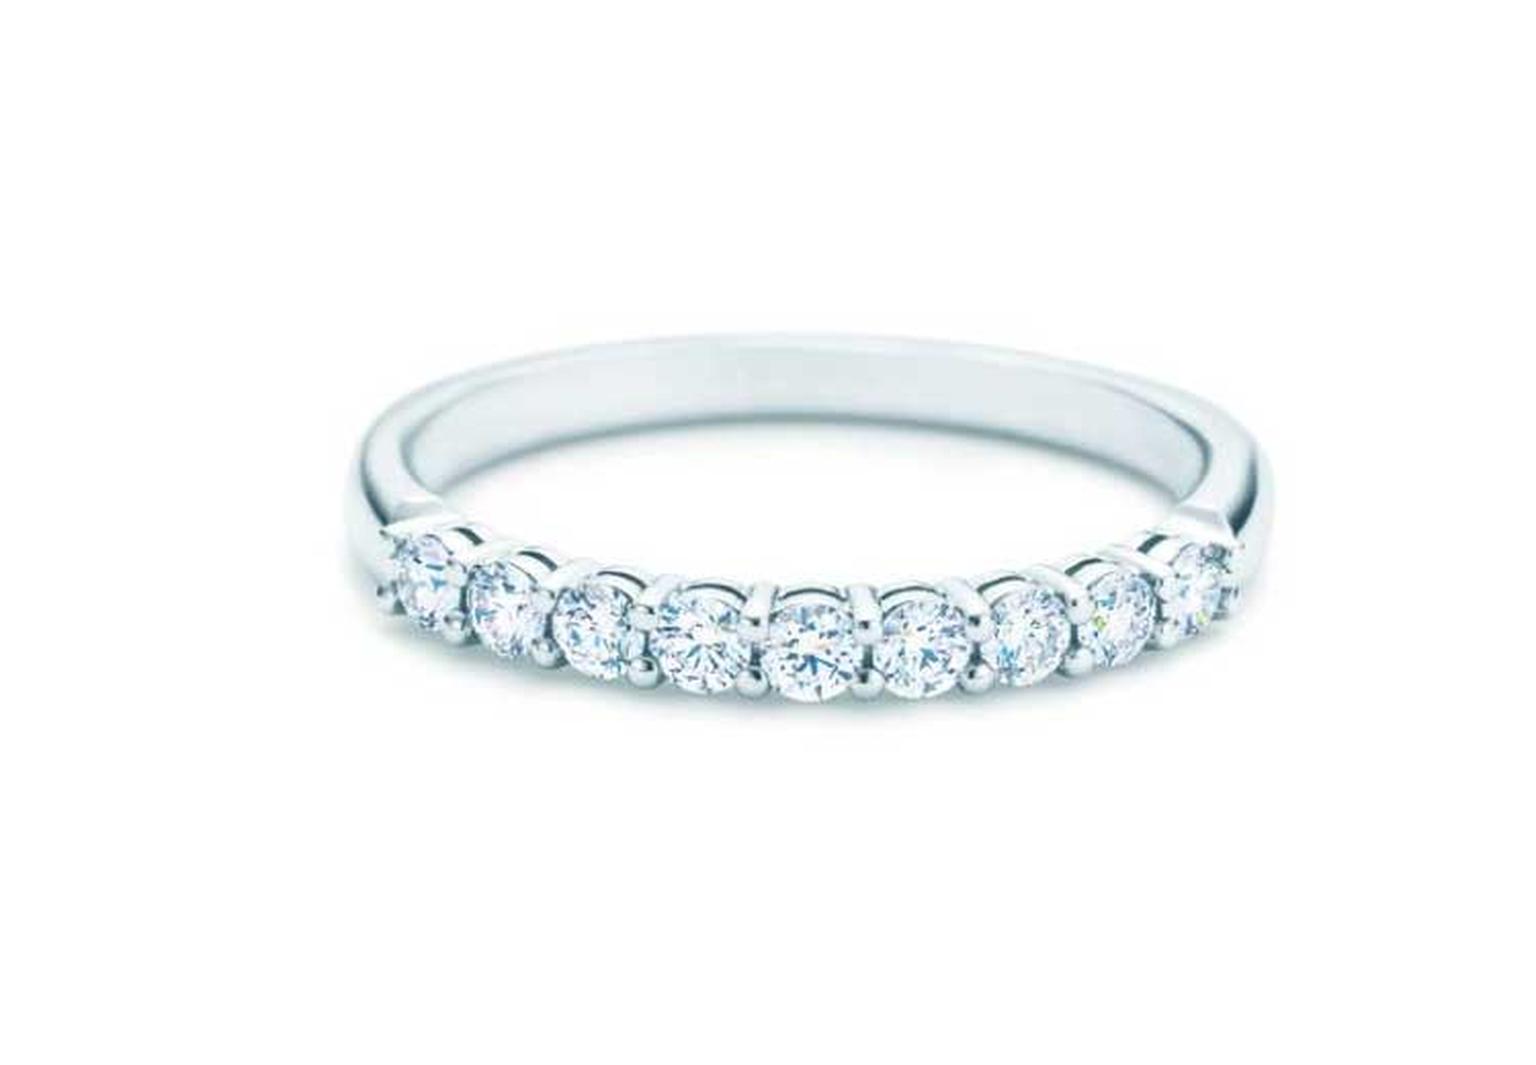 Tiffany & Co. half circle eternity ring in platinum, set with round brilliant diamonds.